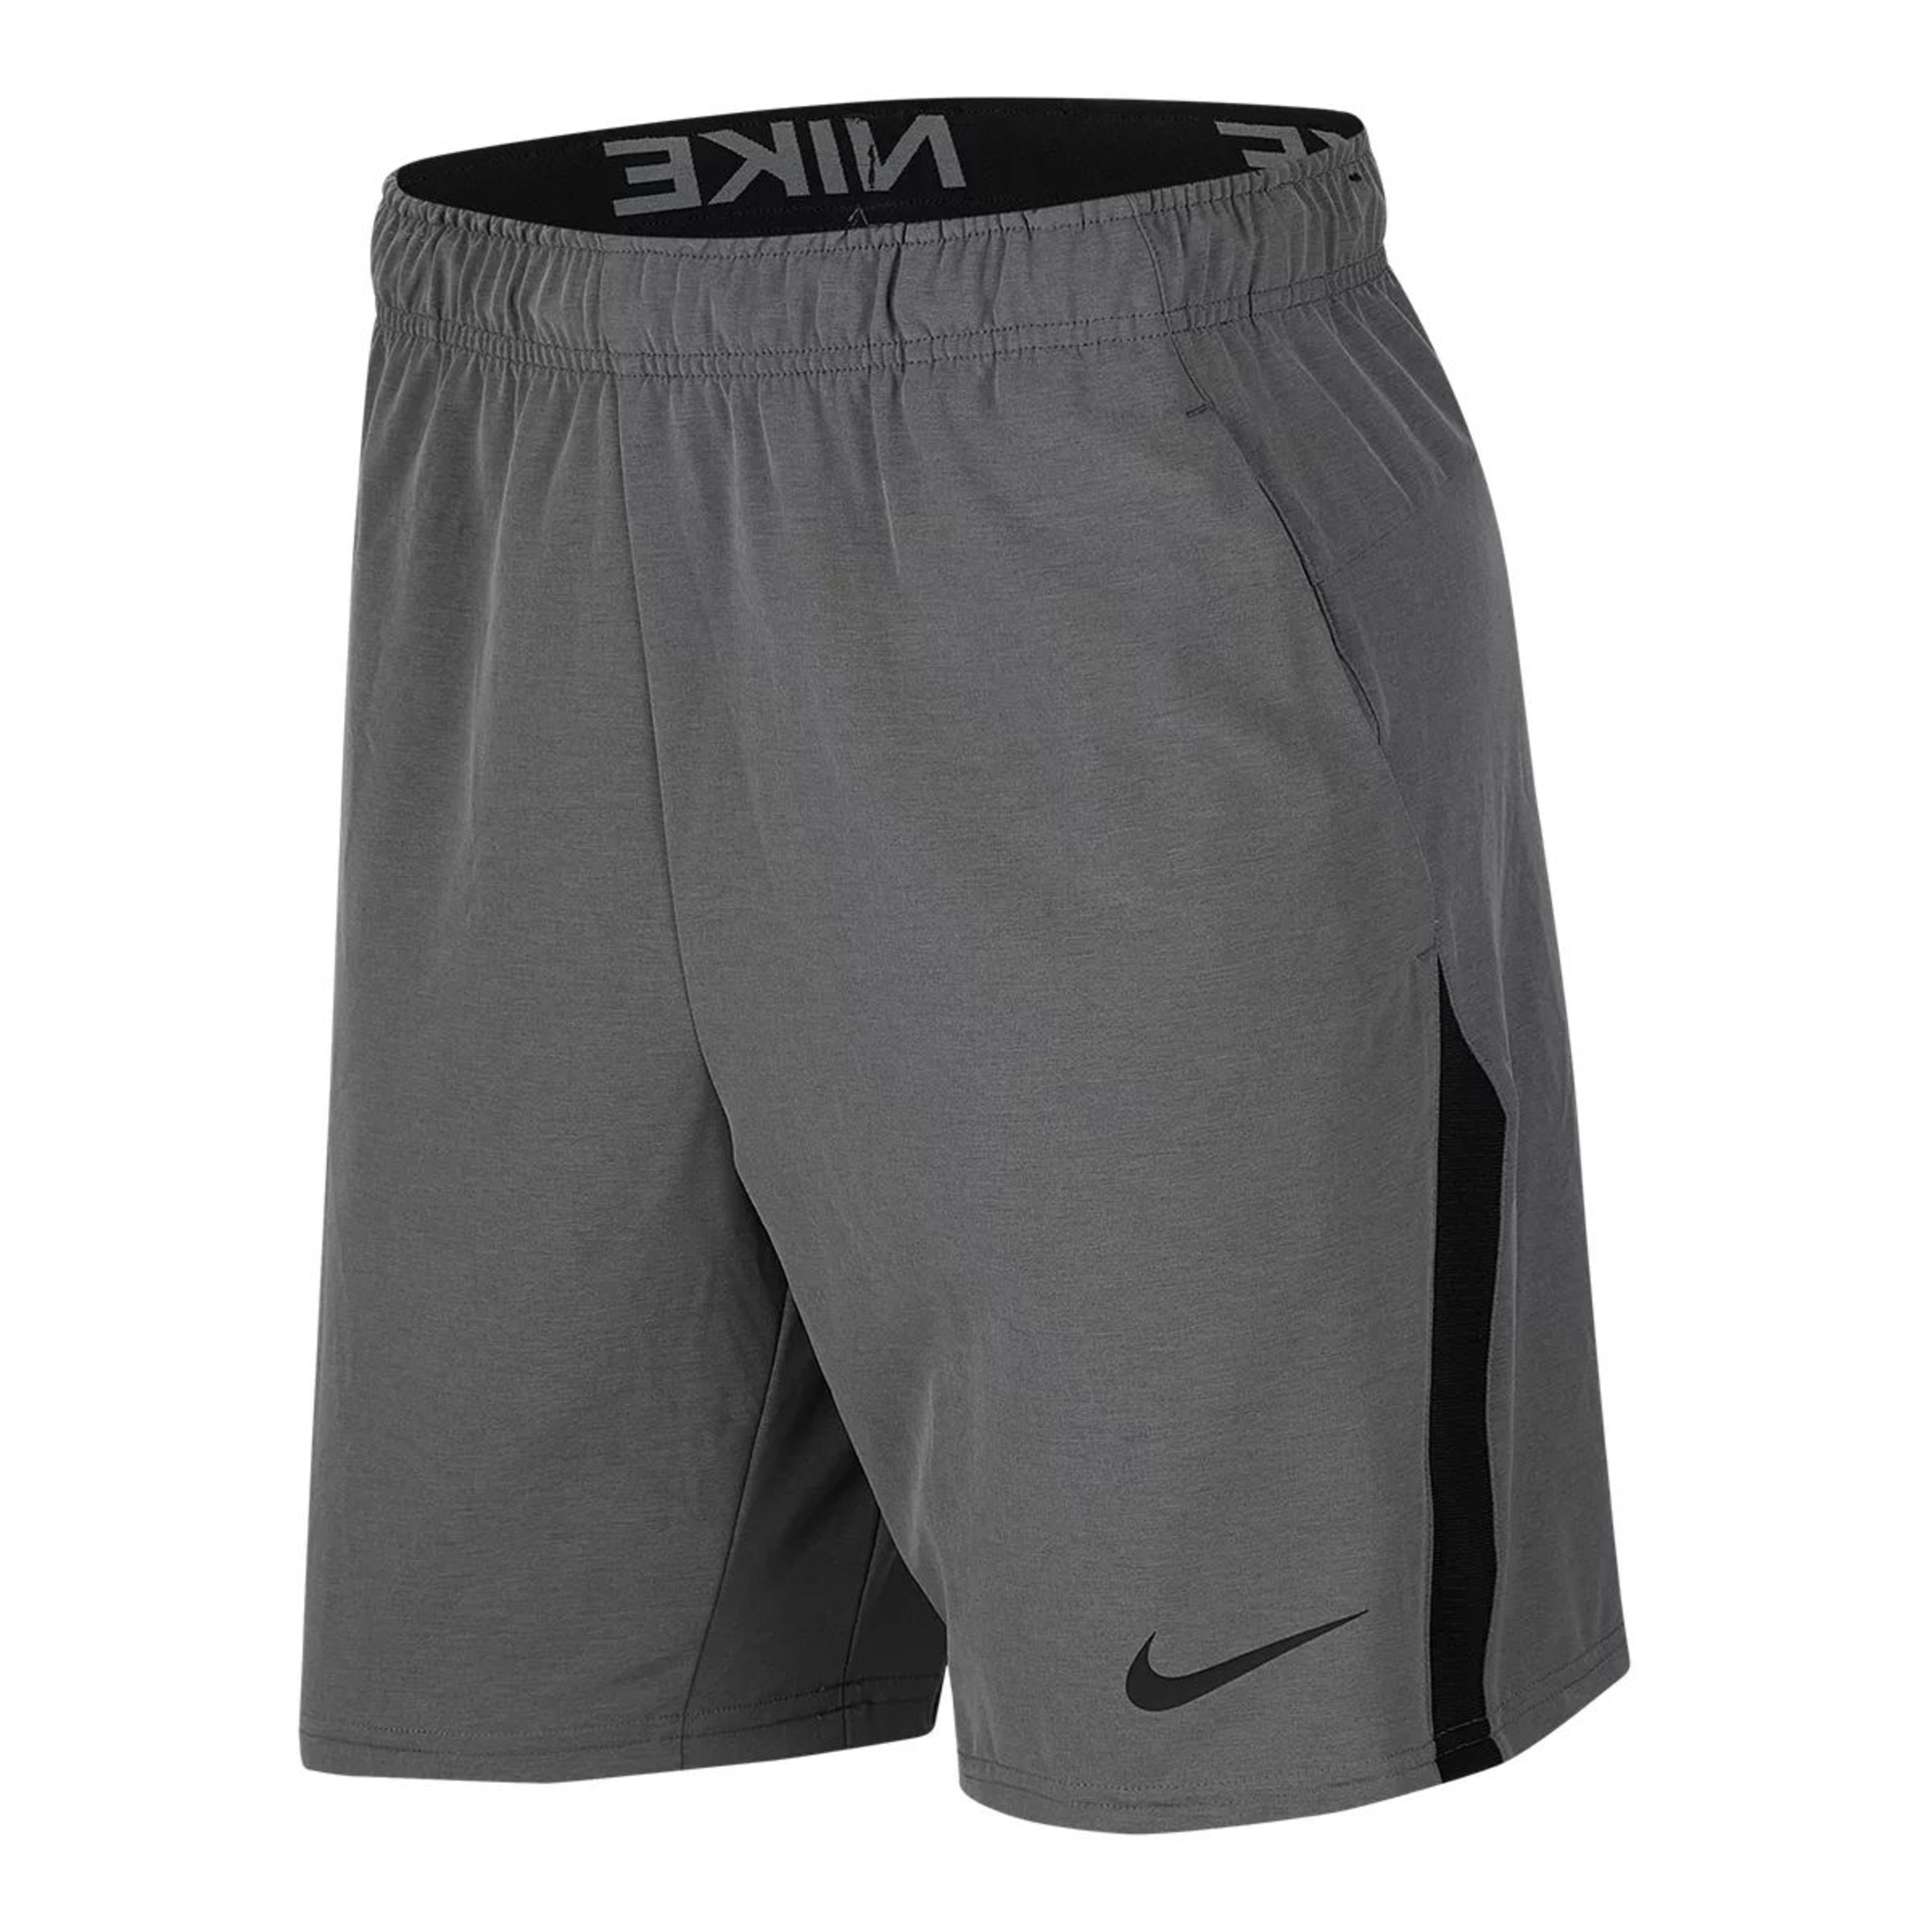 Nike Men's Flex 2.0 Extended Size Woven Shorts | Sportchek